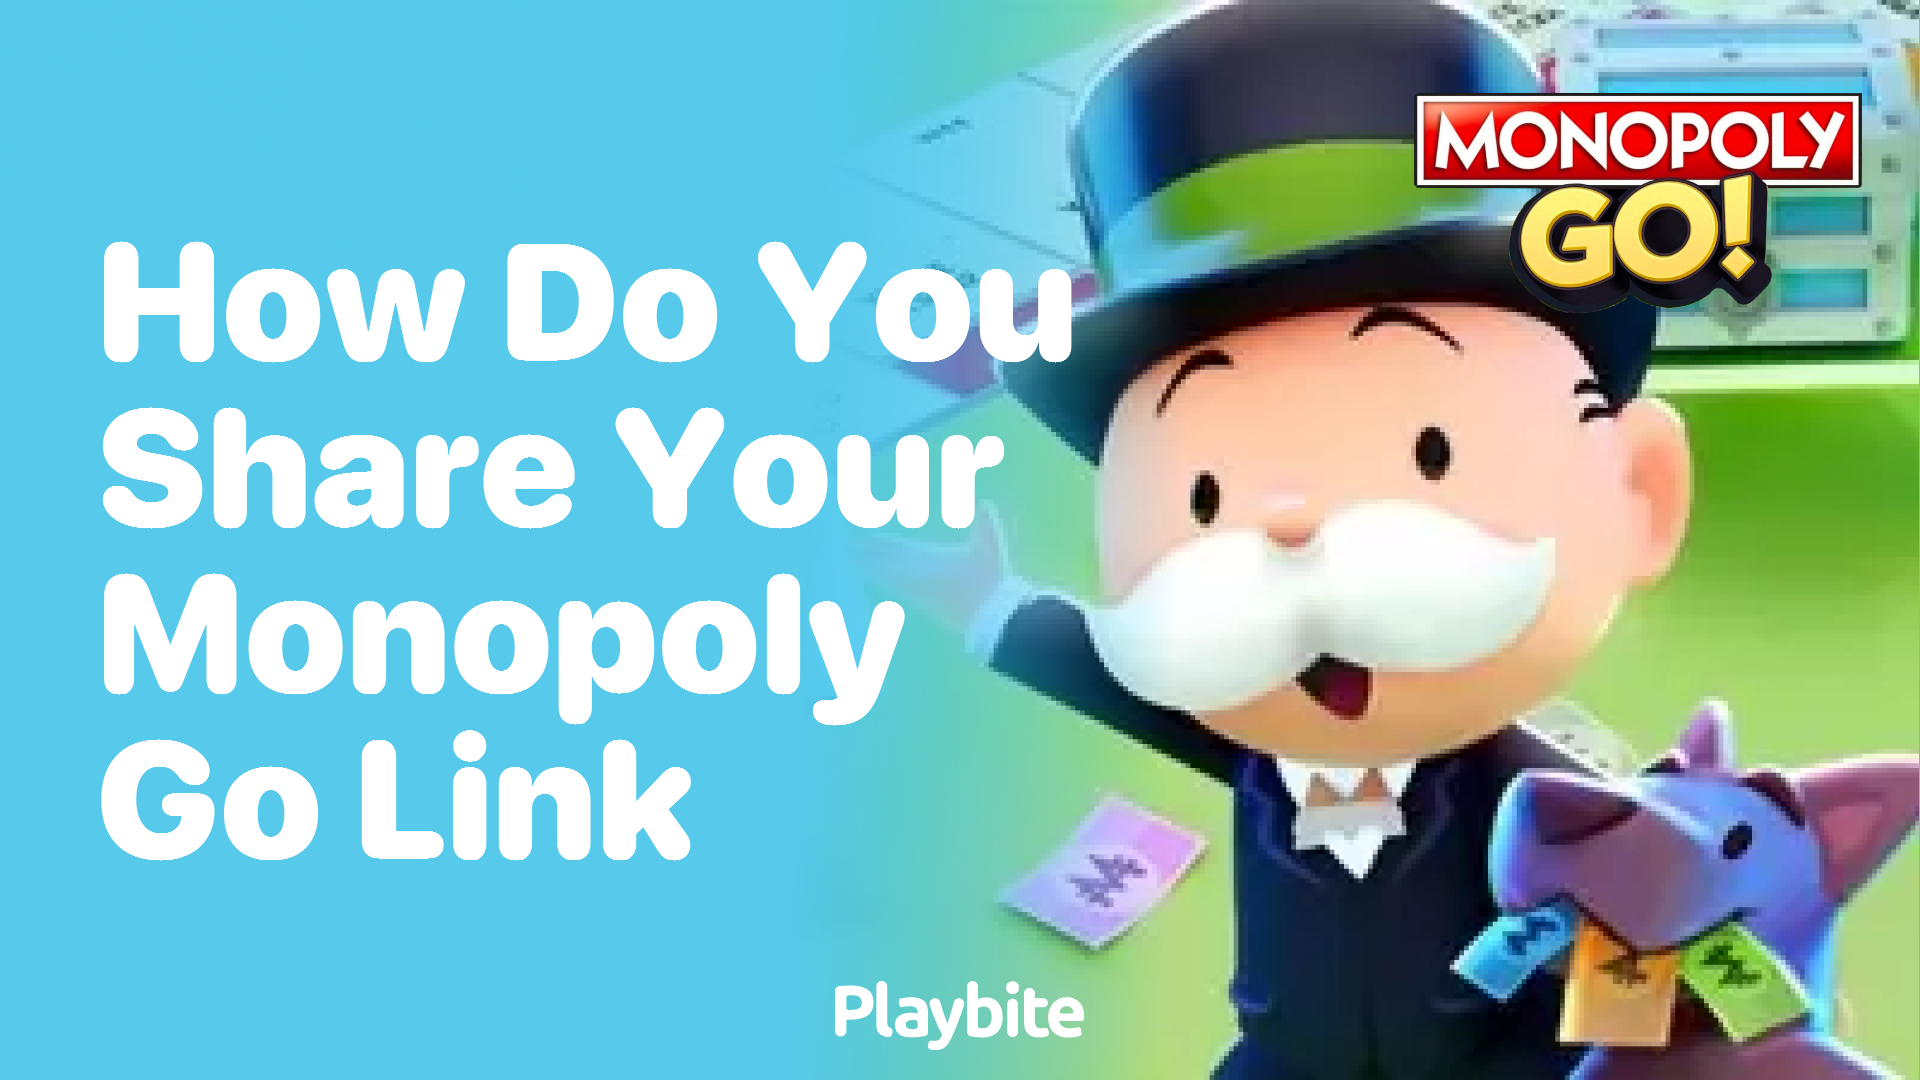 How Do You Share Your Monopoly Go Link?